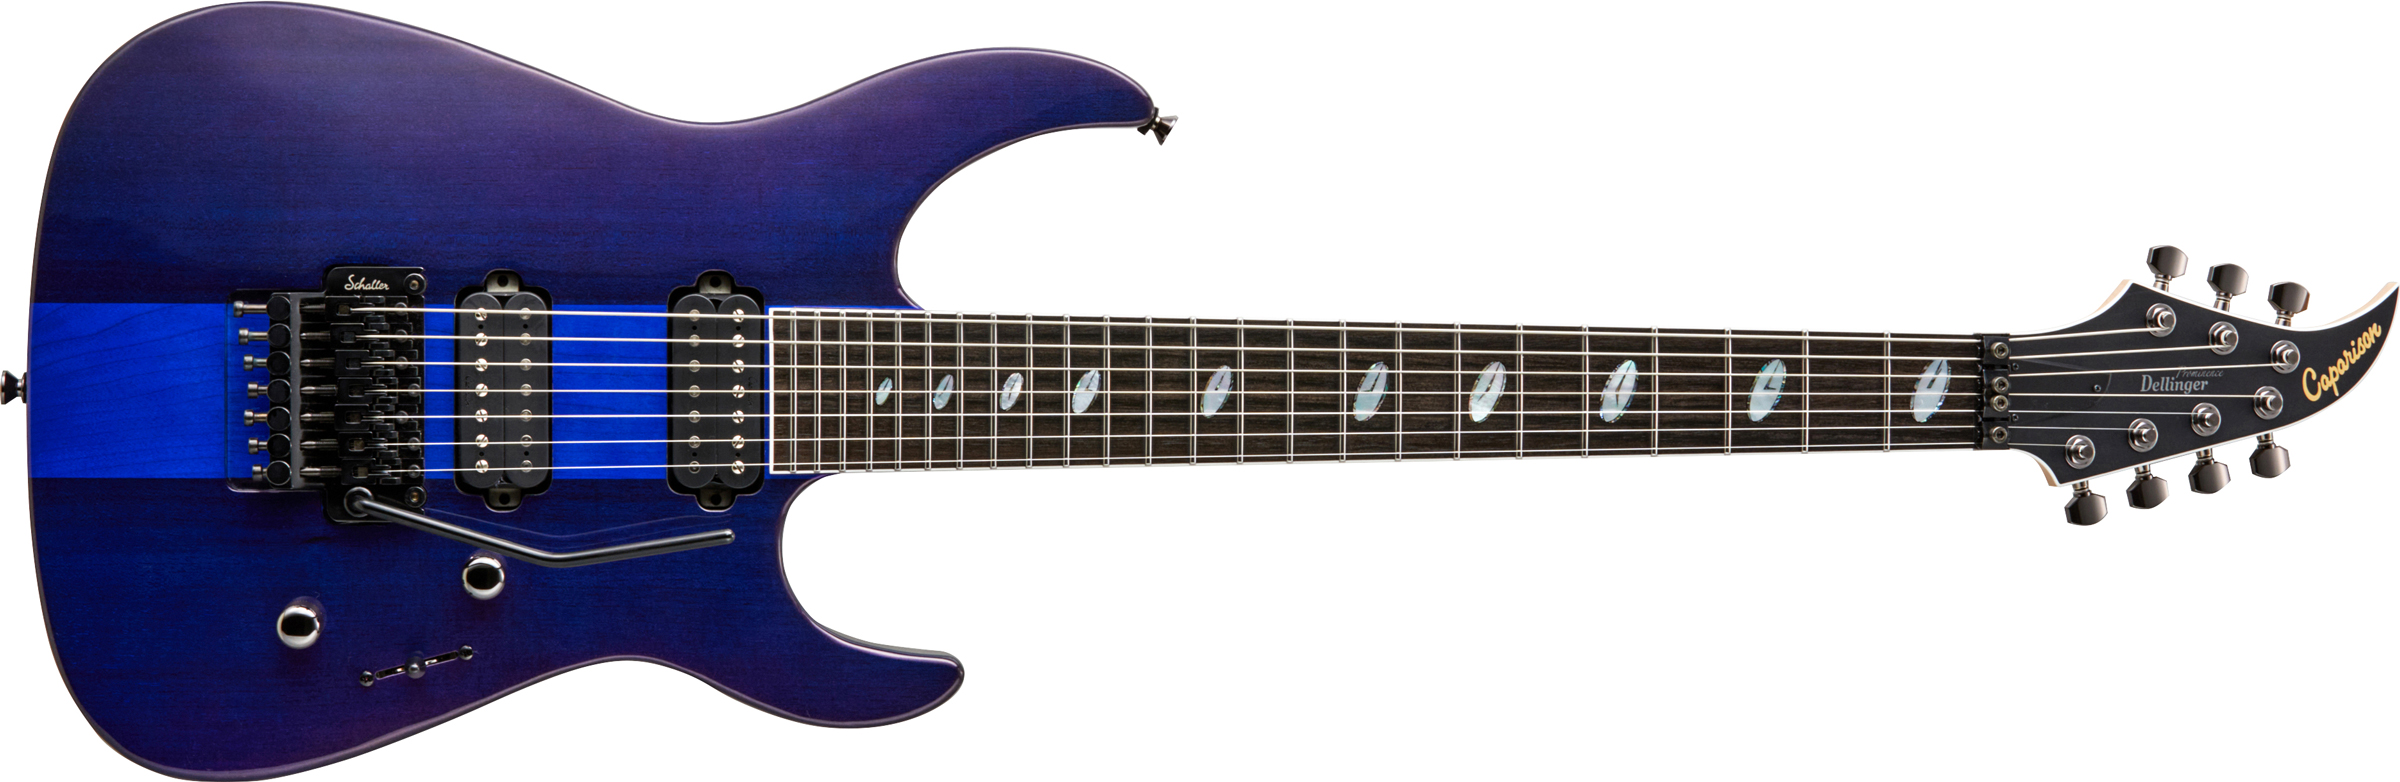 Caparison Guitars Dellinger 7 Prominence EF